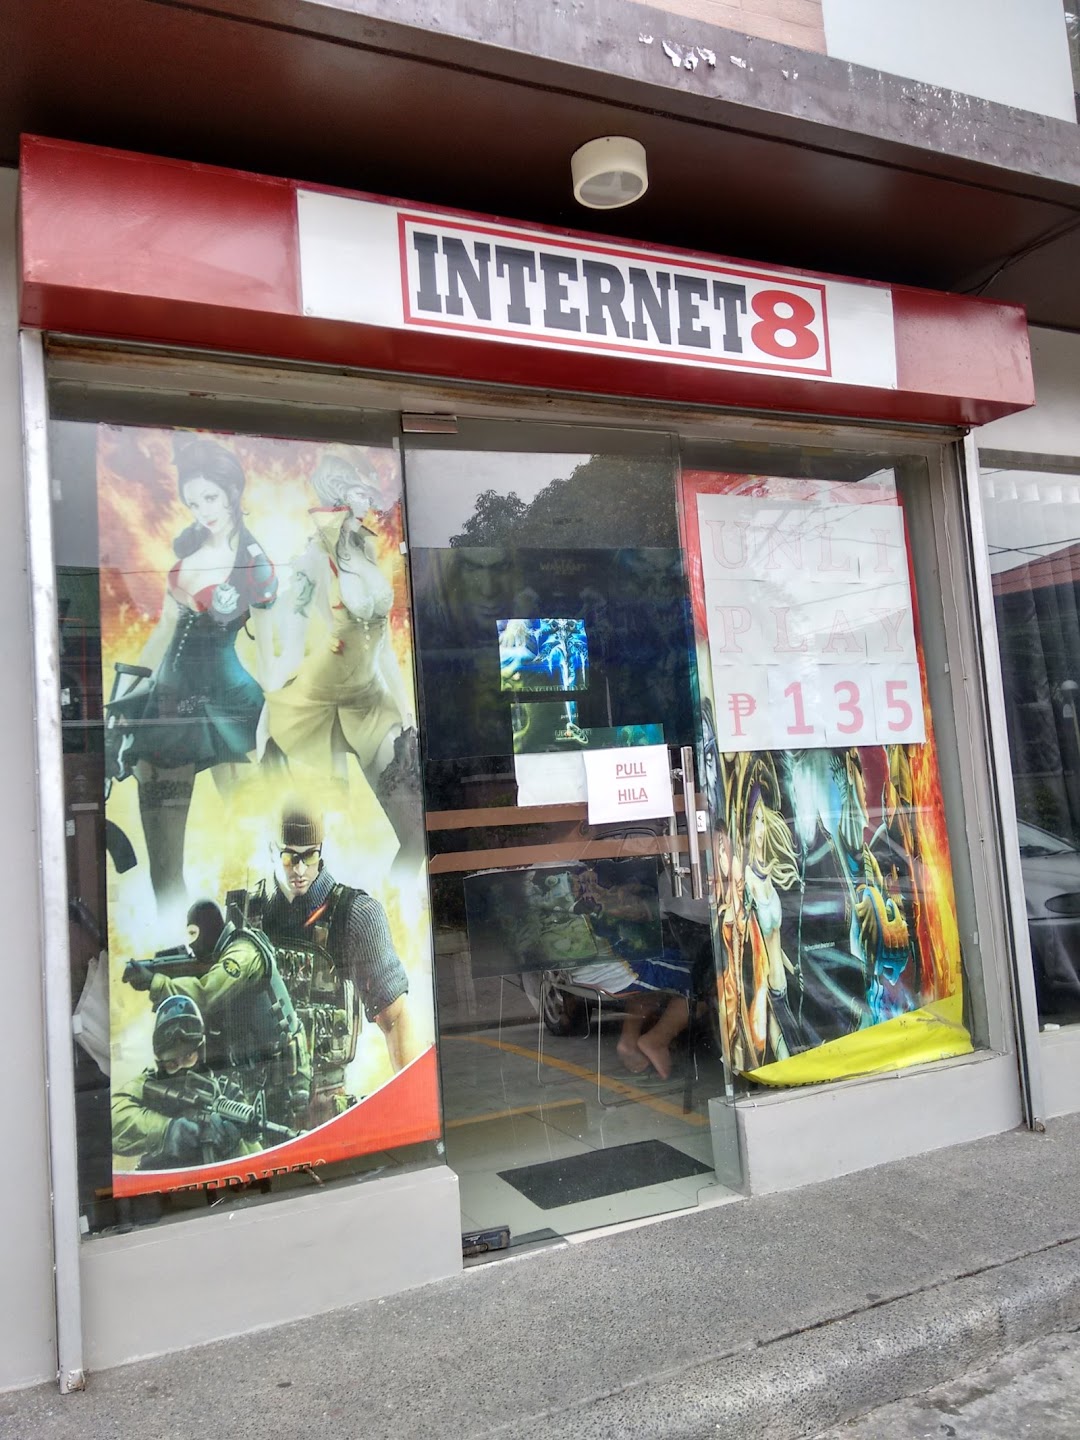 Internet 8